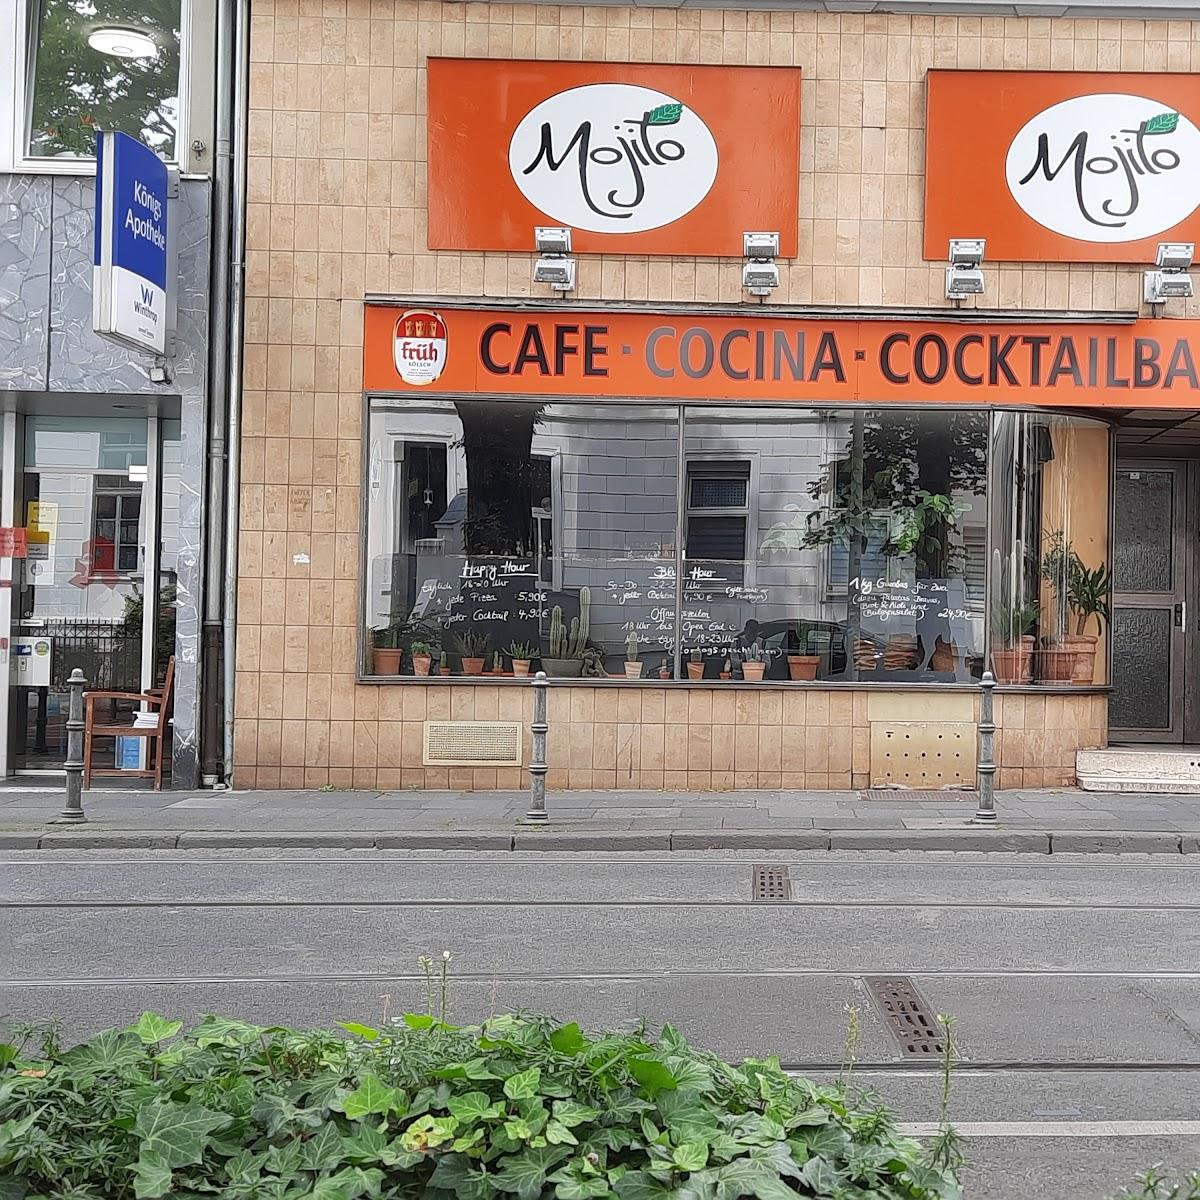 Restaurant "Mojito" in Bonn